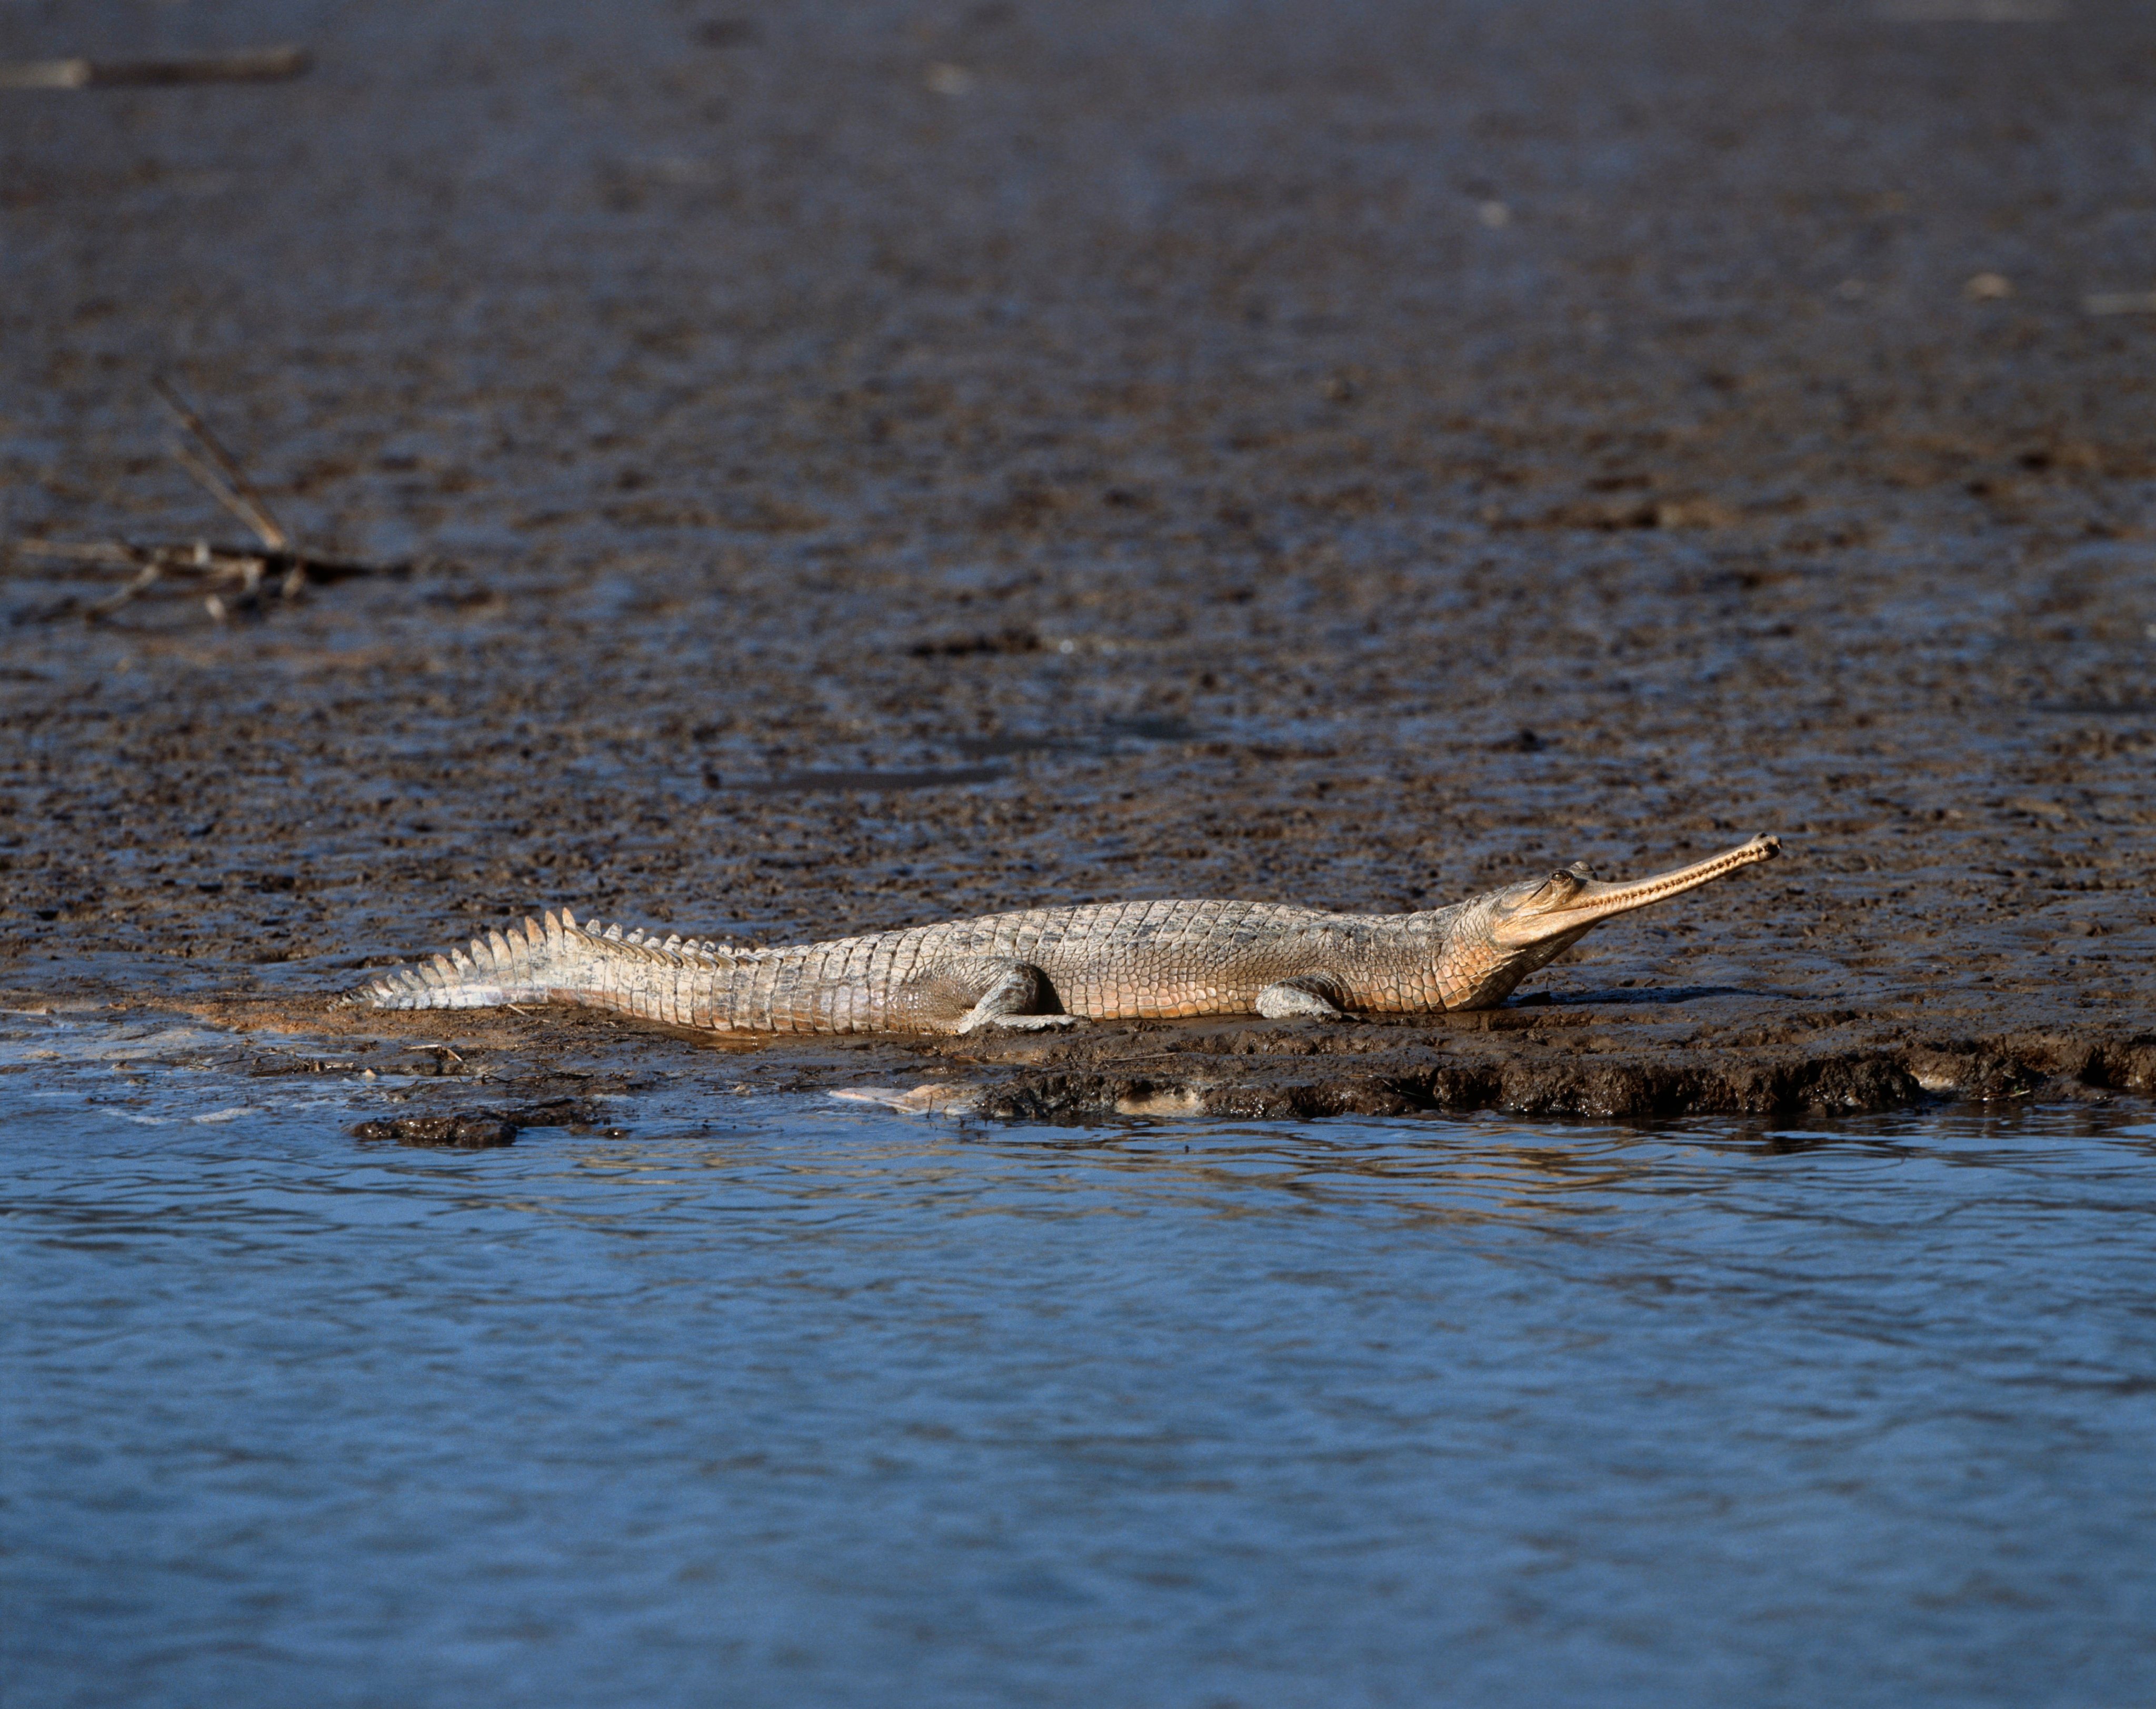 India, Jim Corbett National Park, Gharial gavial or Indian gavial (Gavialis gangeticus) on shore